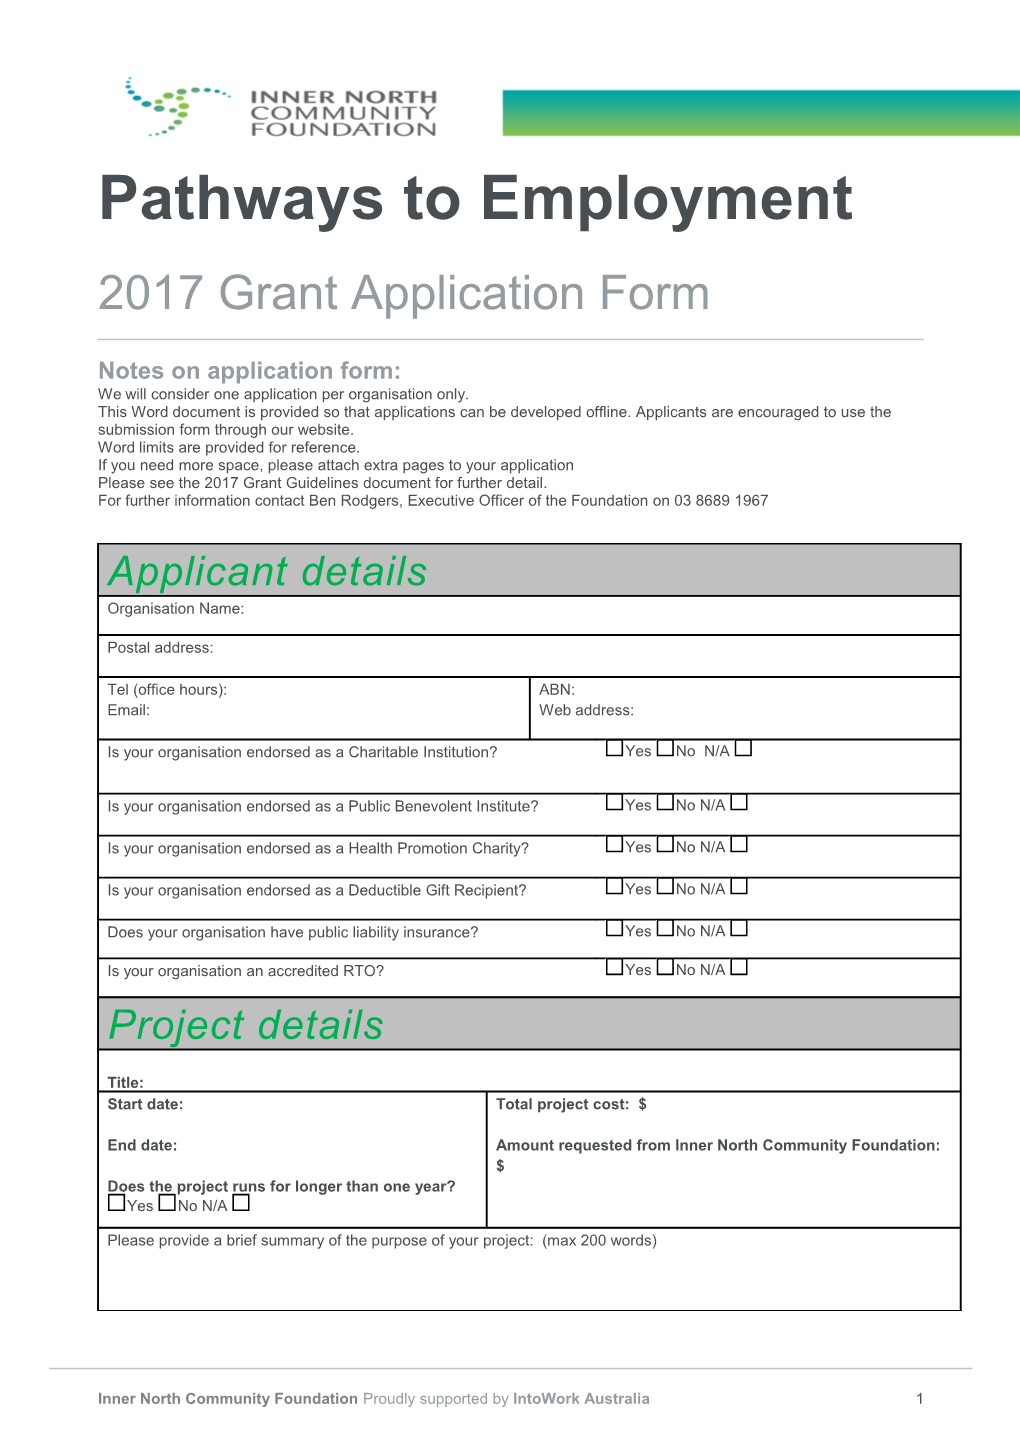 2017Grant Application Form